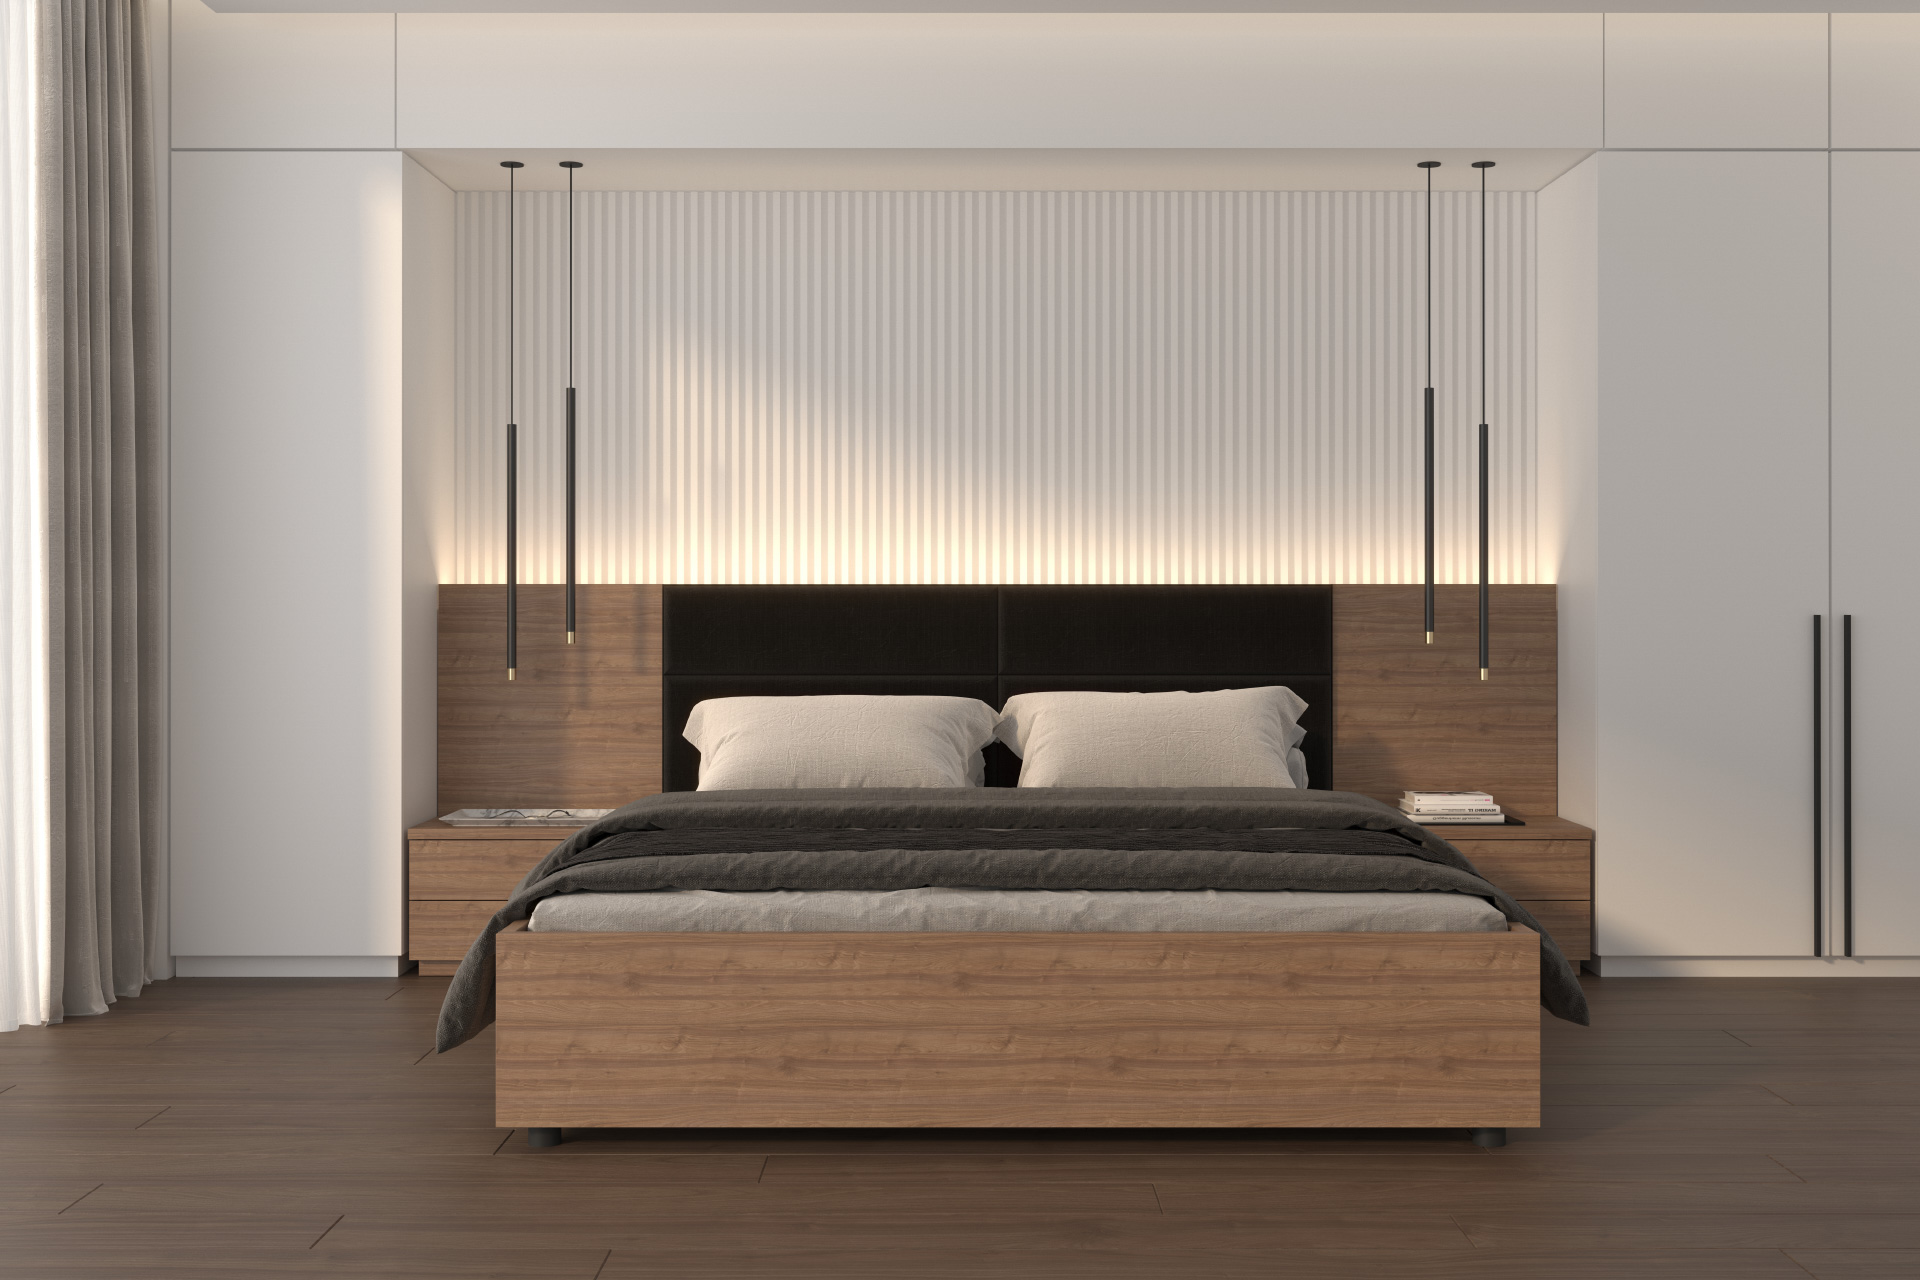 Hanák TAYLOR bedroom Luxurious and premium look